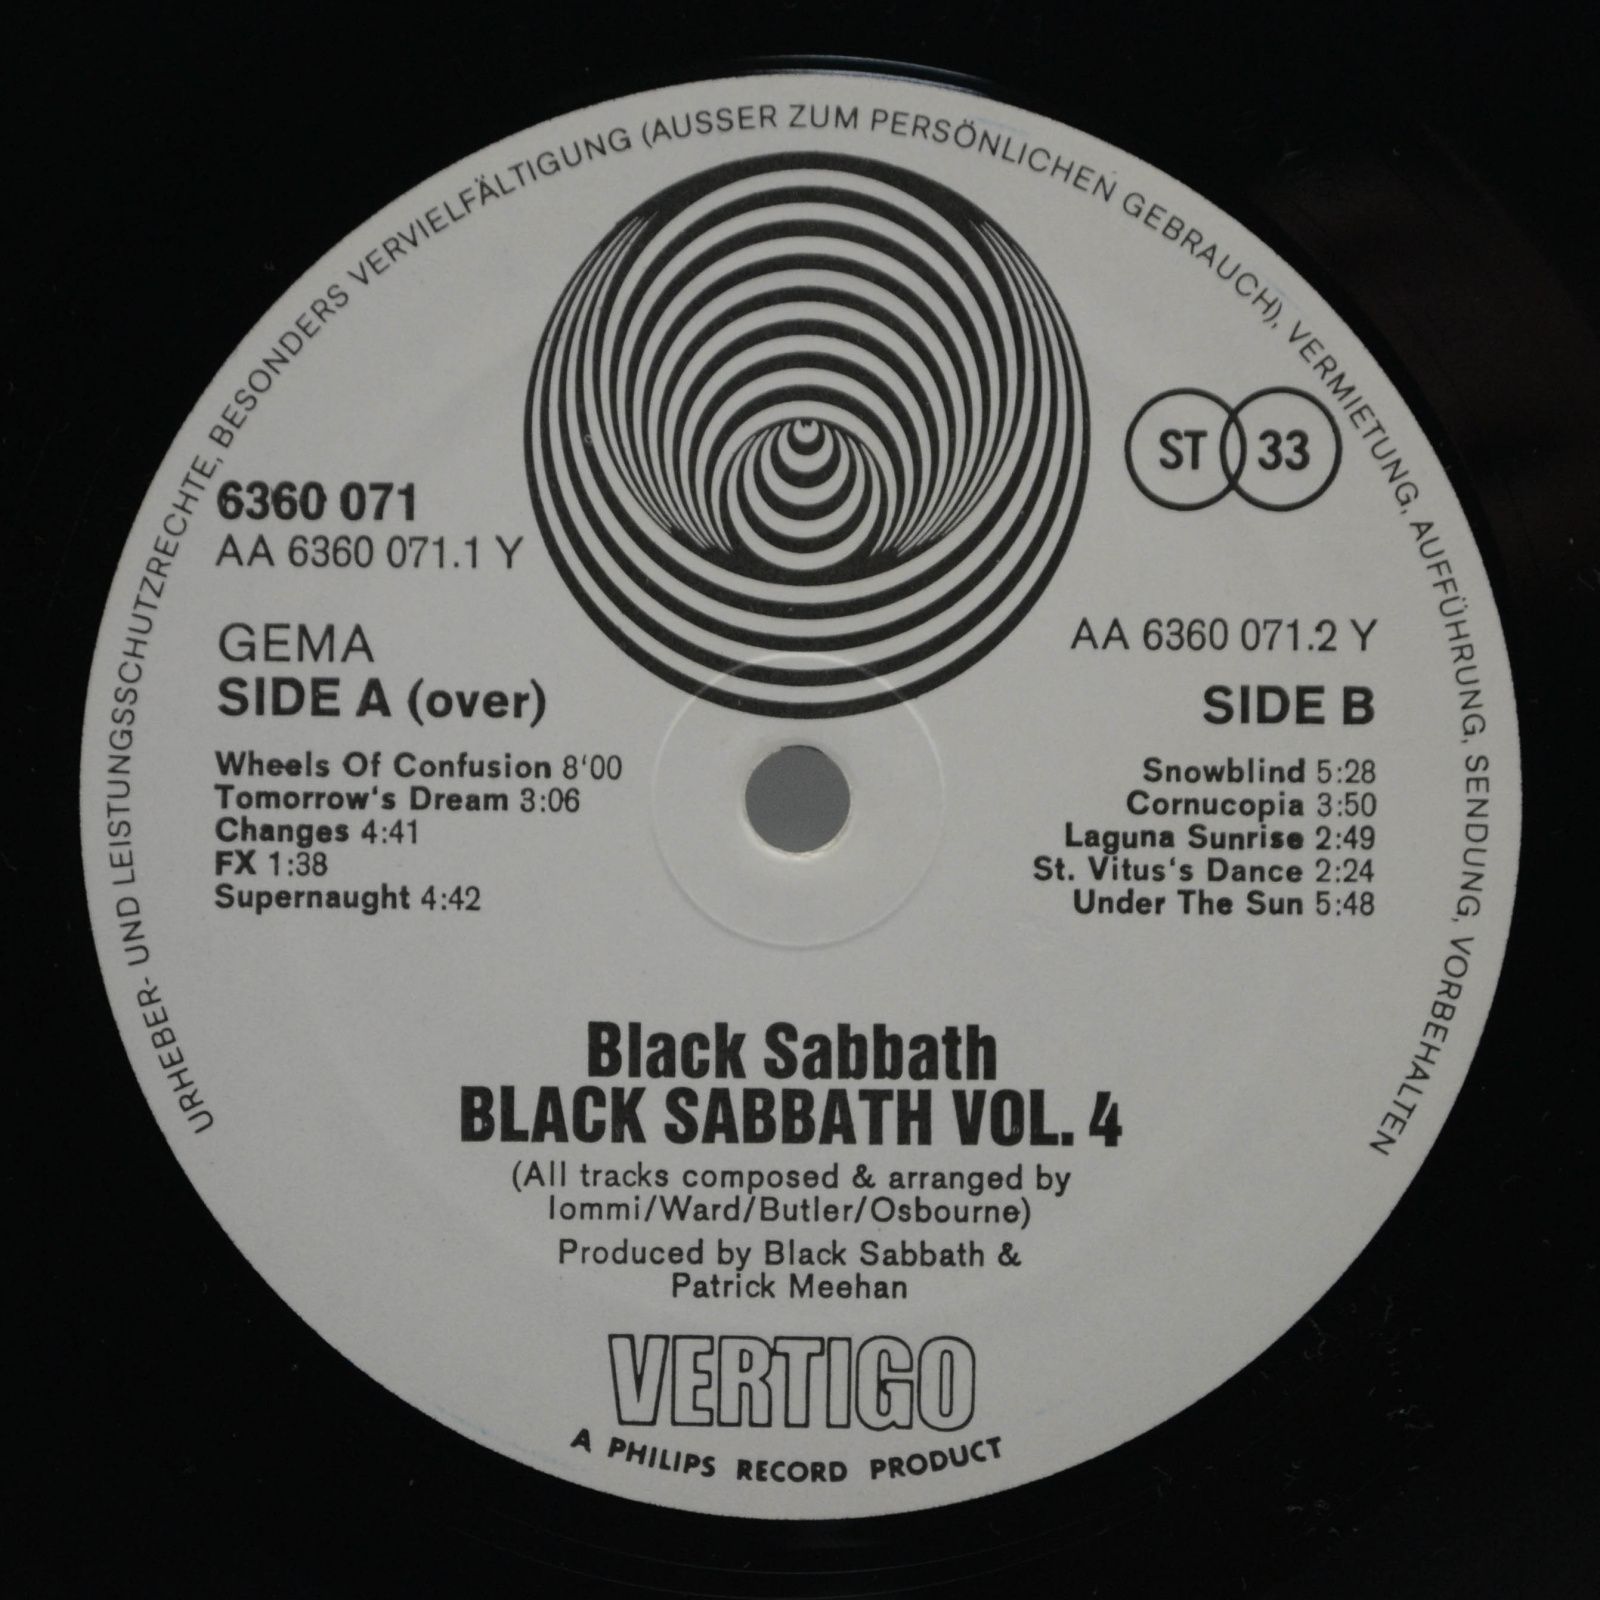 Black Sabbath — Black Sabbath Vol 4 (Vertigo swirl), 1972